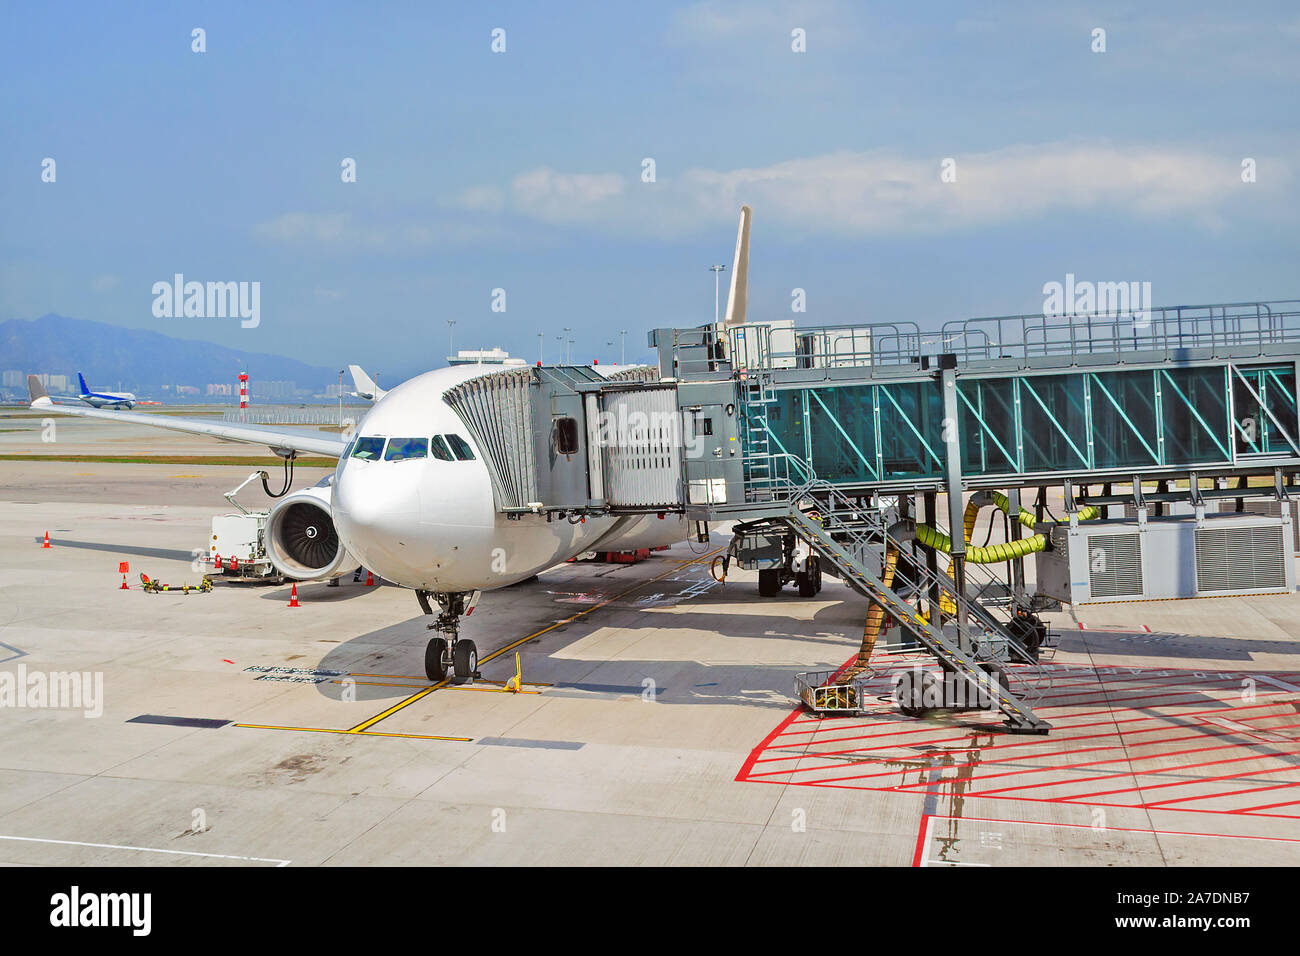 Airport apron with passenger plane and jet bridge for passengers Stock Photo